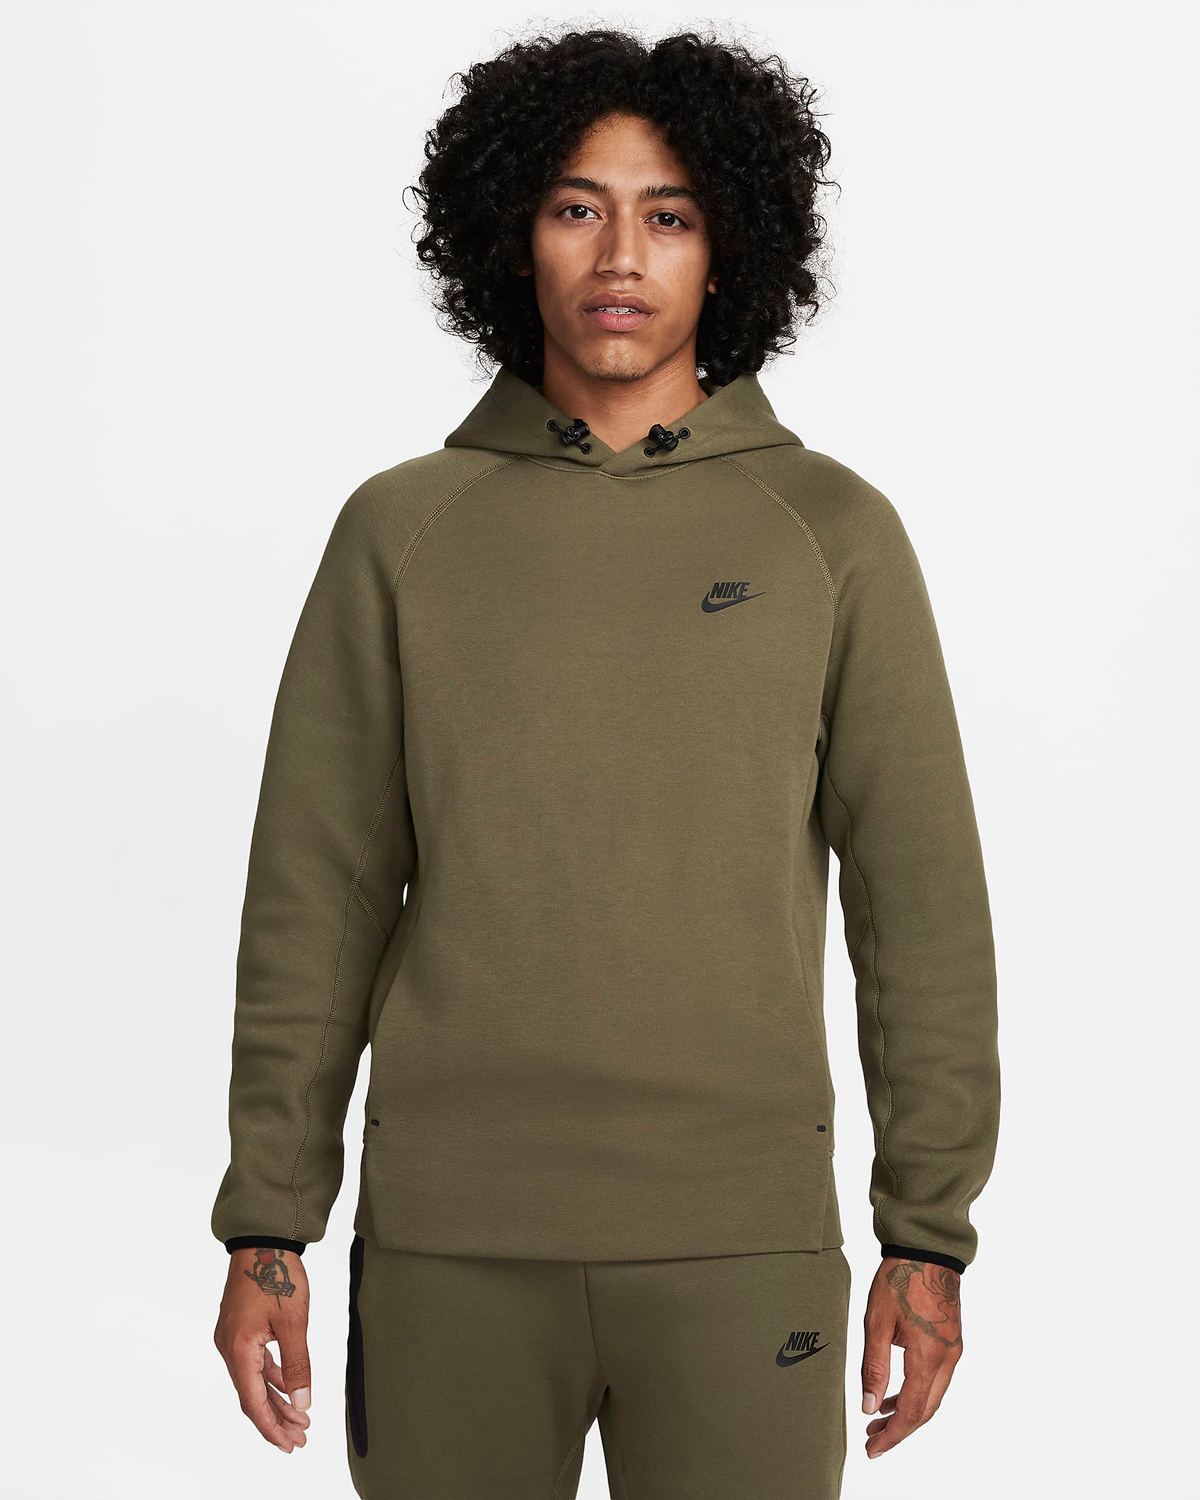 Nike-Tech-Fleece-Pullover-Hoodie-Medium-Olive-Black